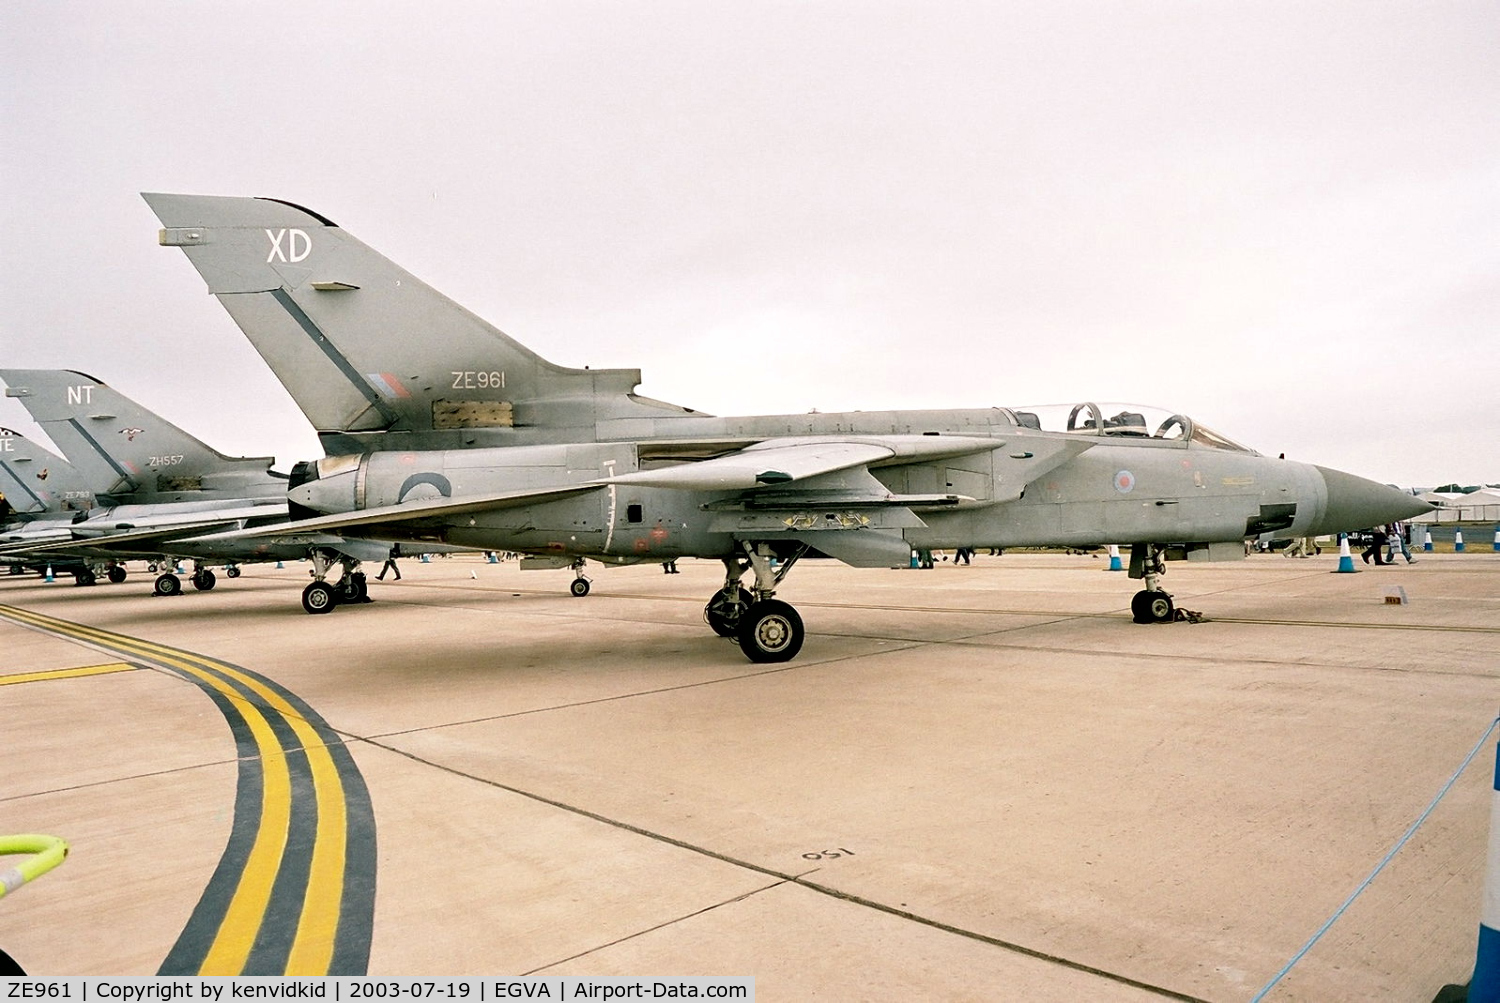 ZE961, 1989 Panavia Tornado F.3 C/N 3373, Royal Air Force at RIAT.